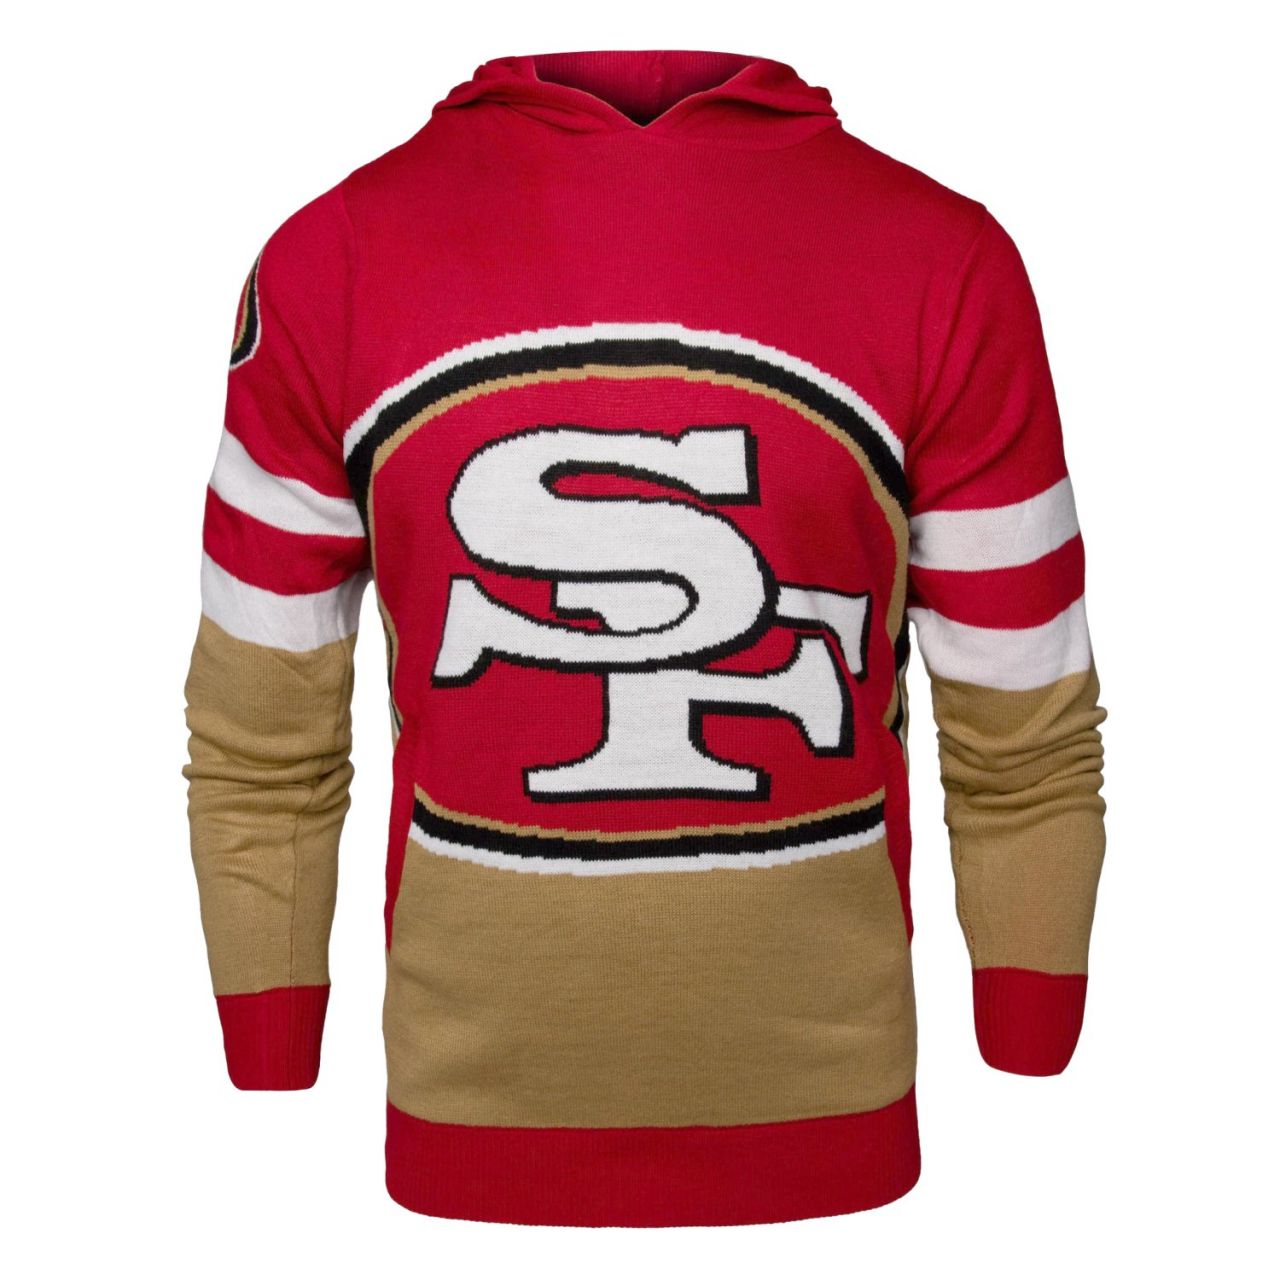 amfoo - NFL Ugly Sweater Big Logo Hoody - San Francisco 49ers